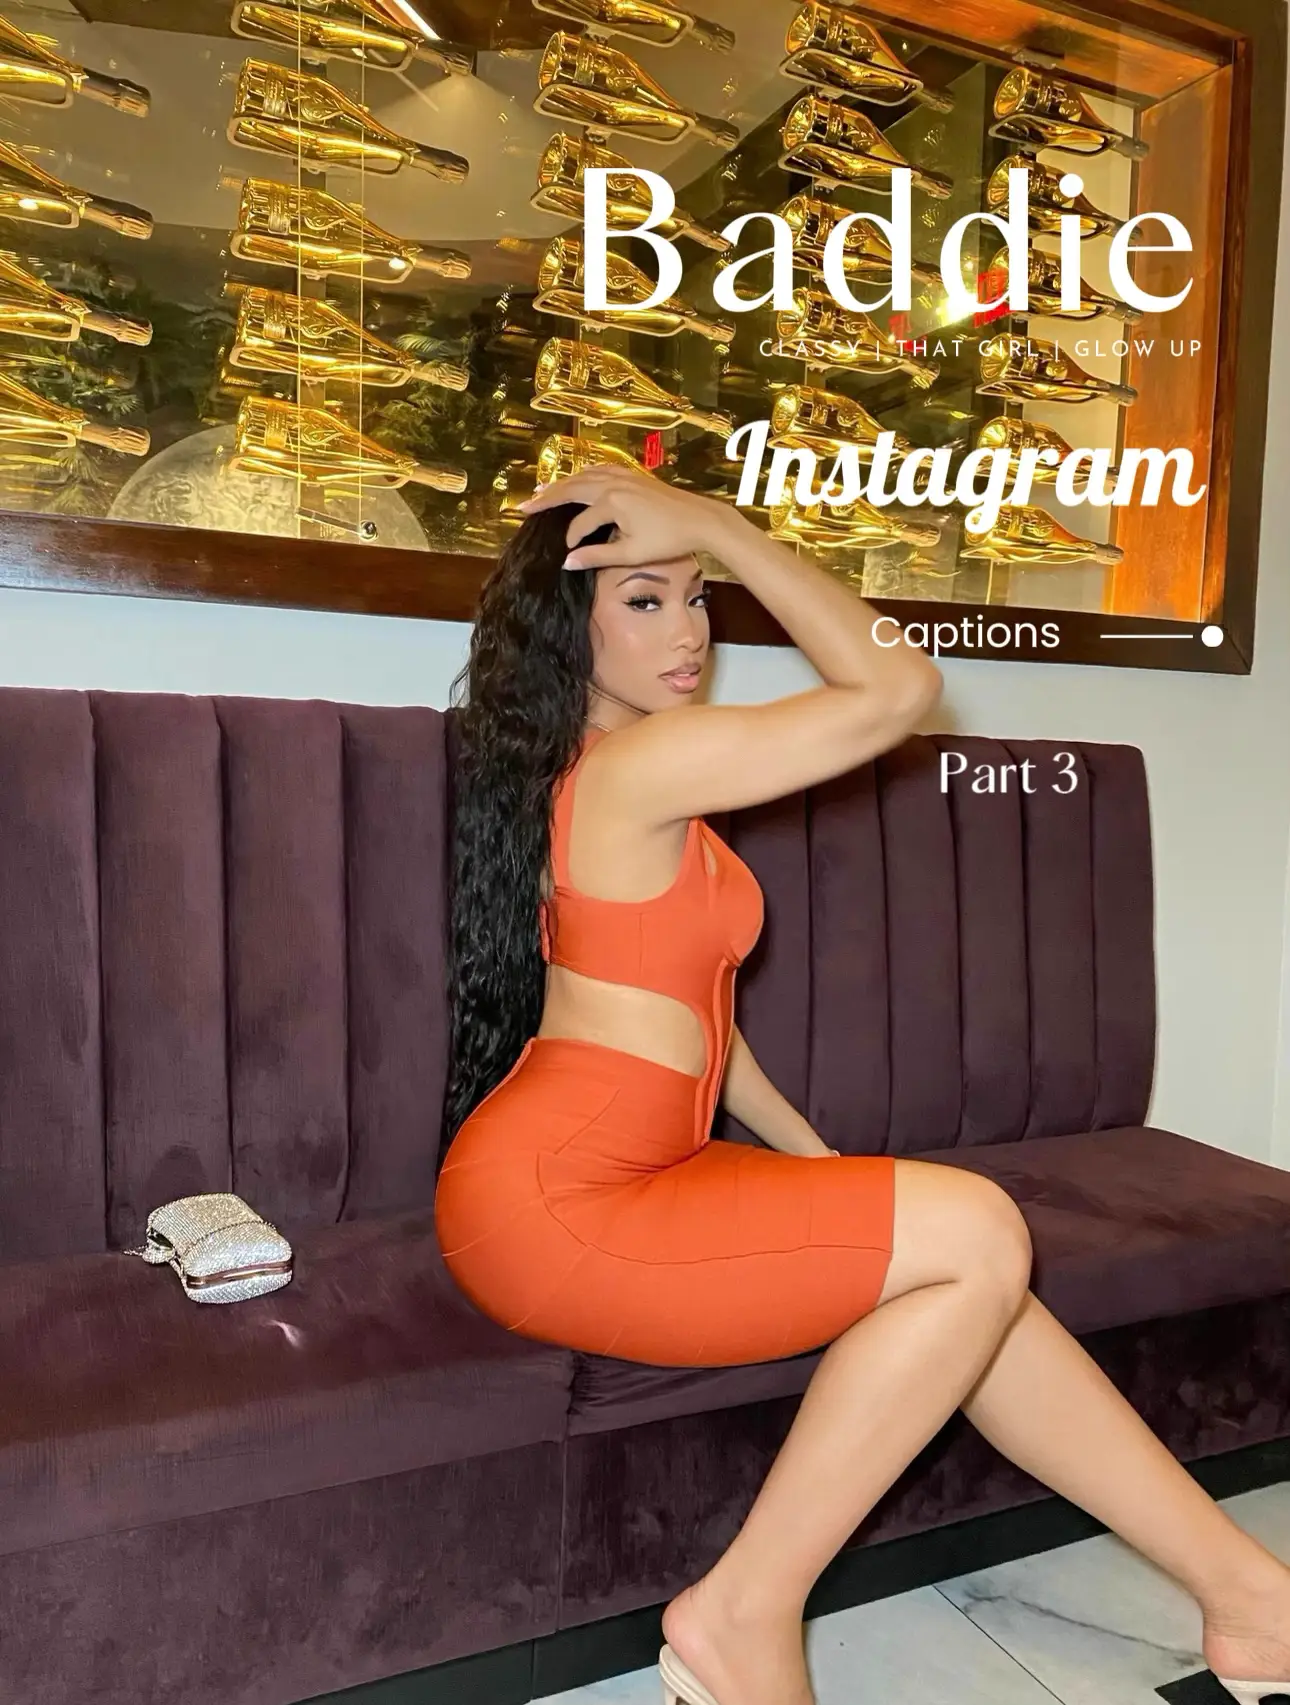 Instagram Captions (Baddie edition)'s images